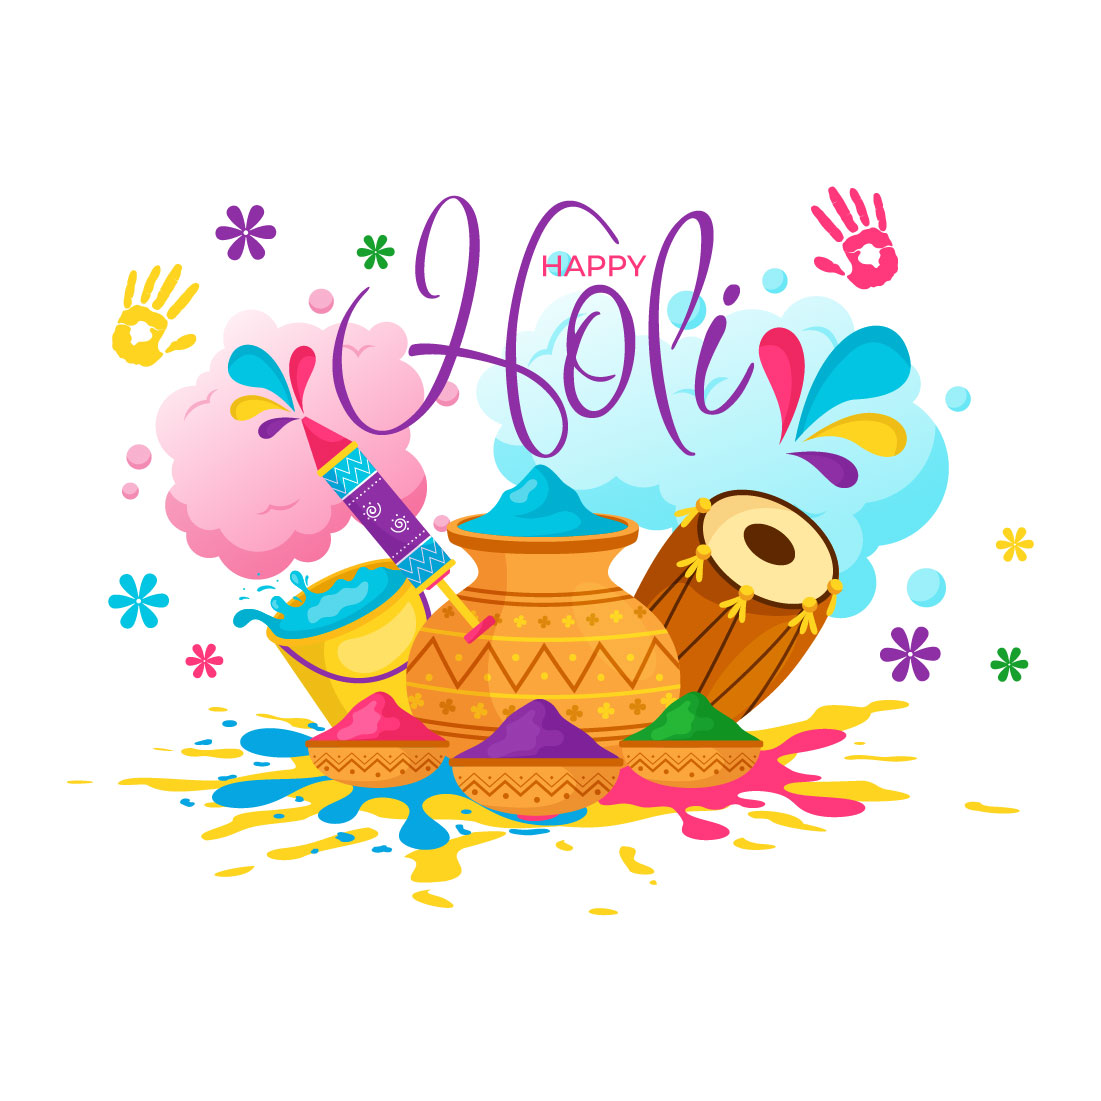 13 Happy Holi Festival Illustration preview image.